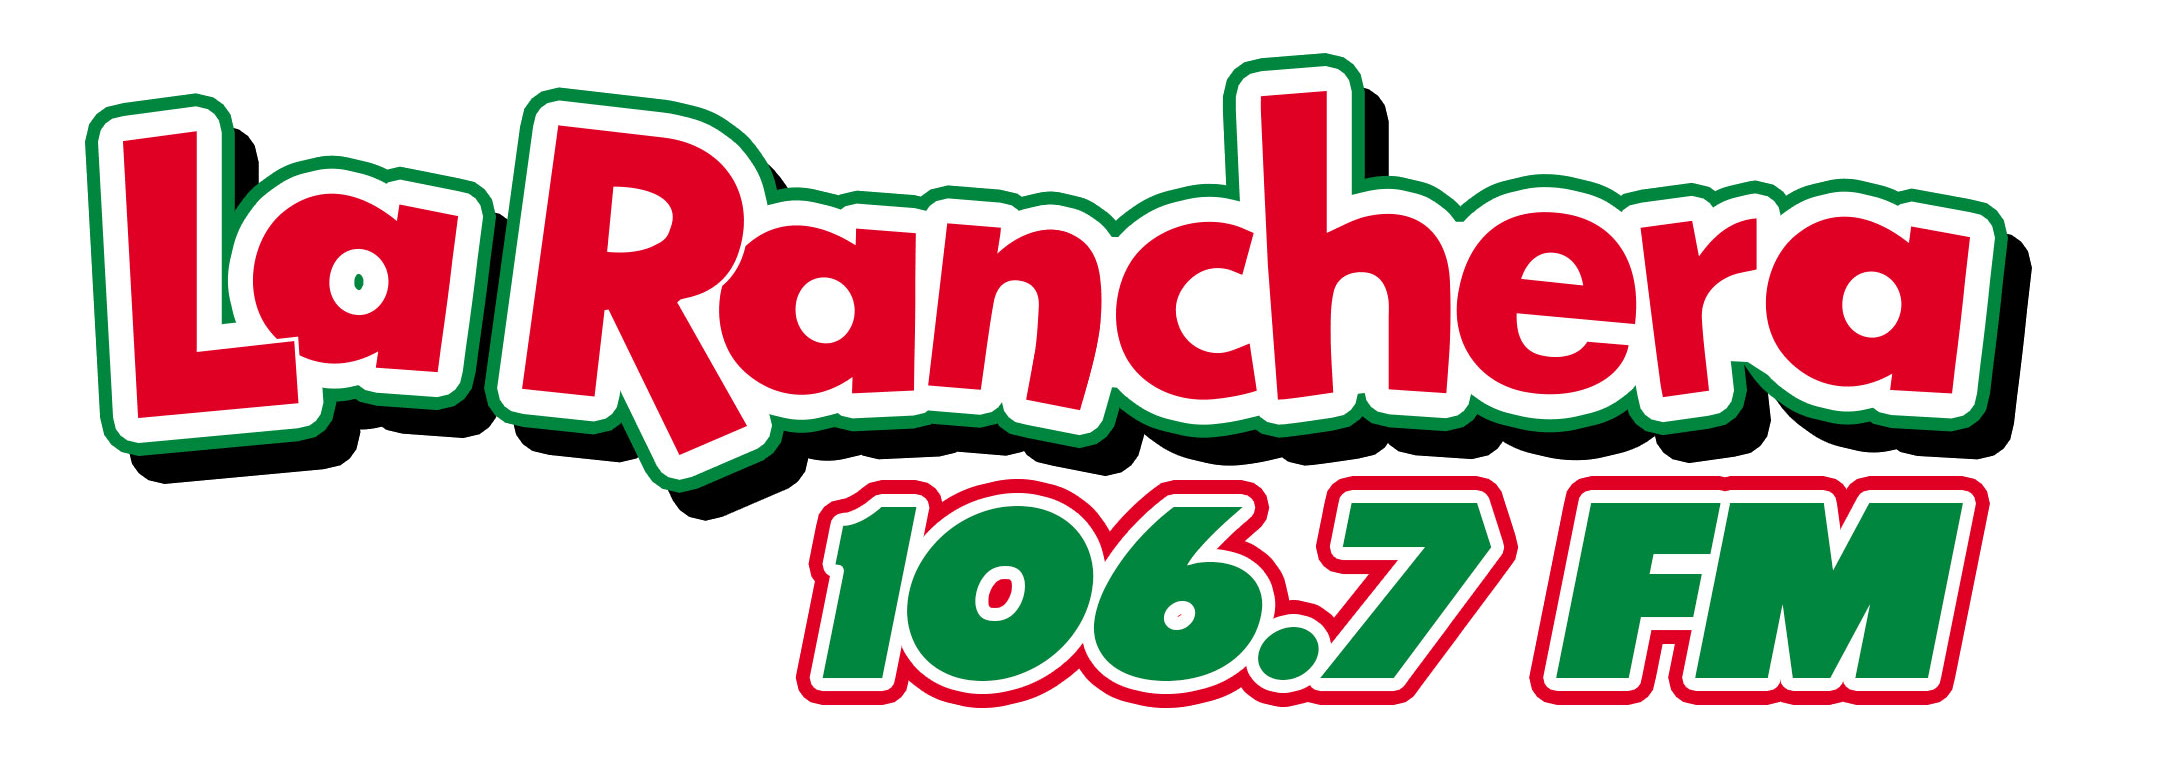 Attachment Logo - logo-final-ranchera-DALLASalfa - Lone Star Park at Grand Prairie